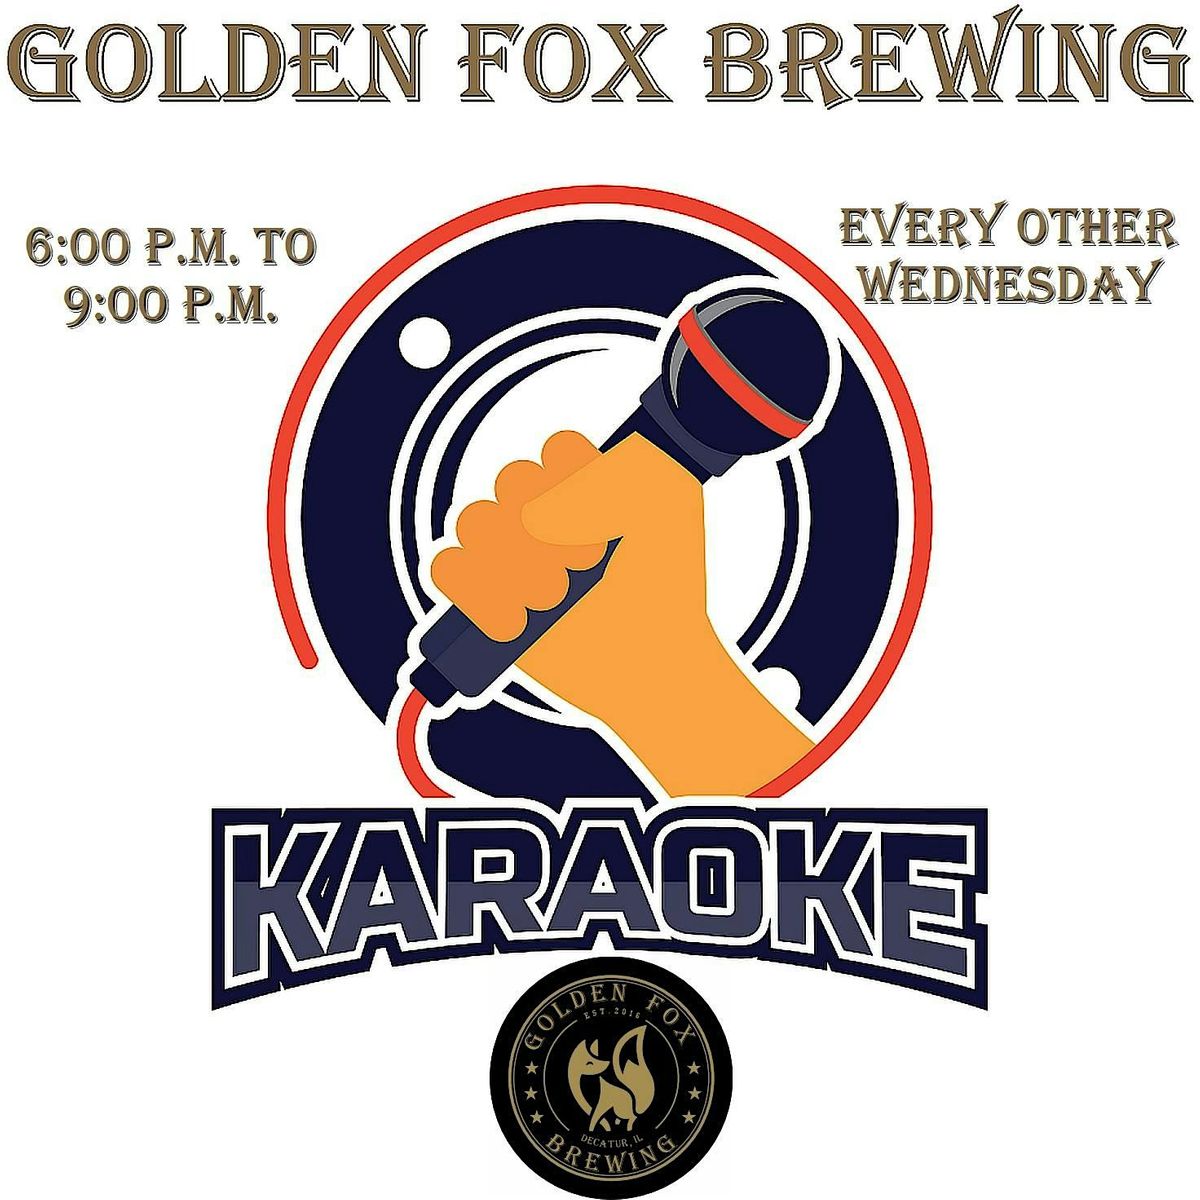 Karaoke at the Golden Fox Brewery!